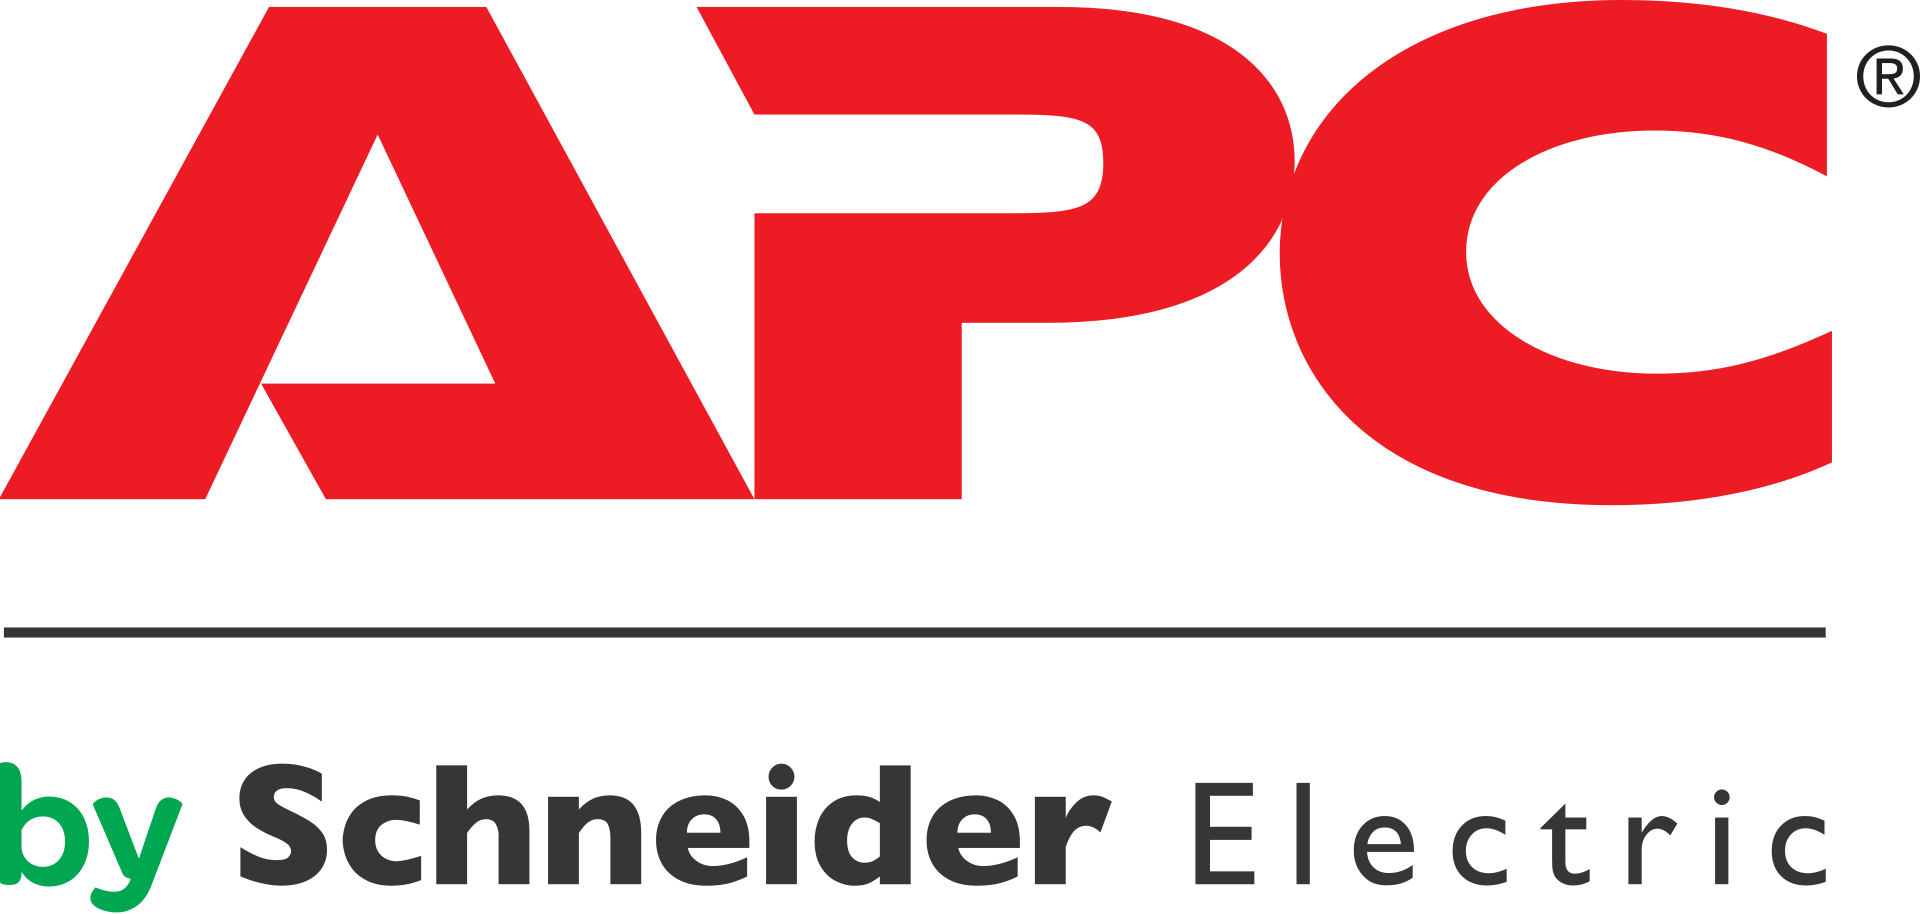 Schneider Electric - APC - American Power Conversion - APC by Schneider Electric